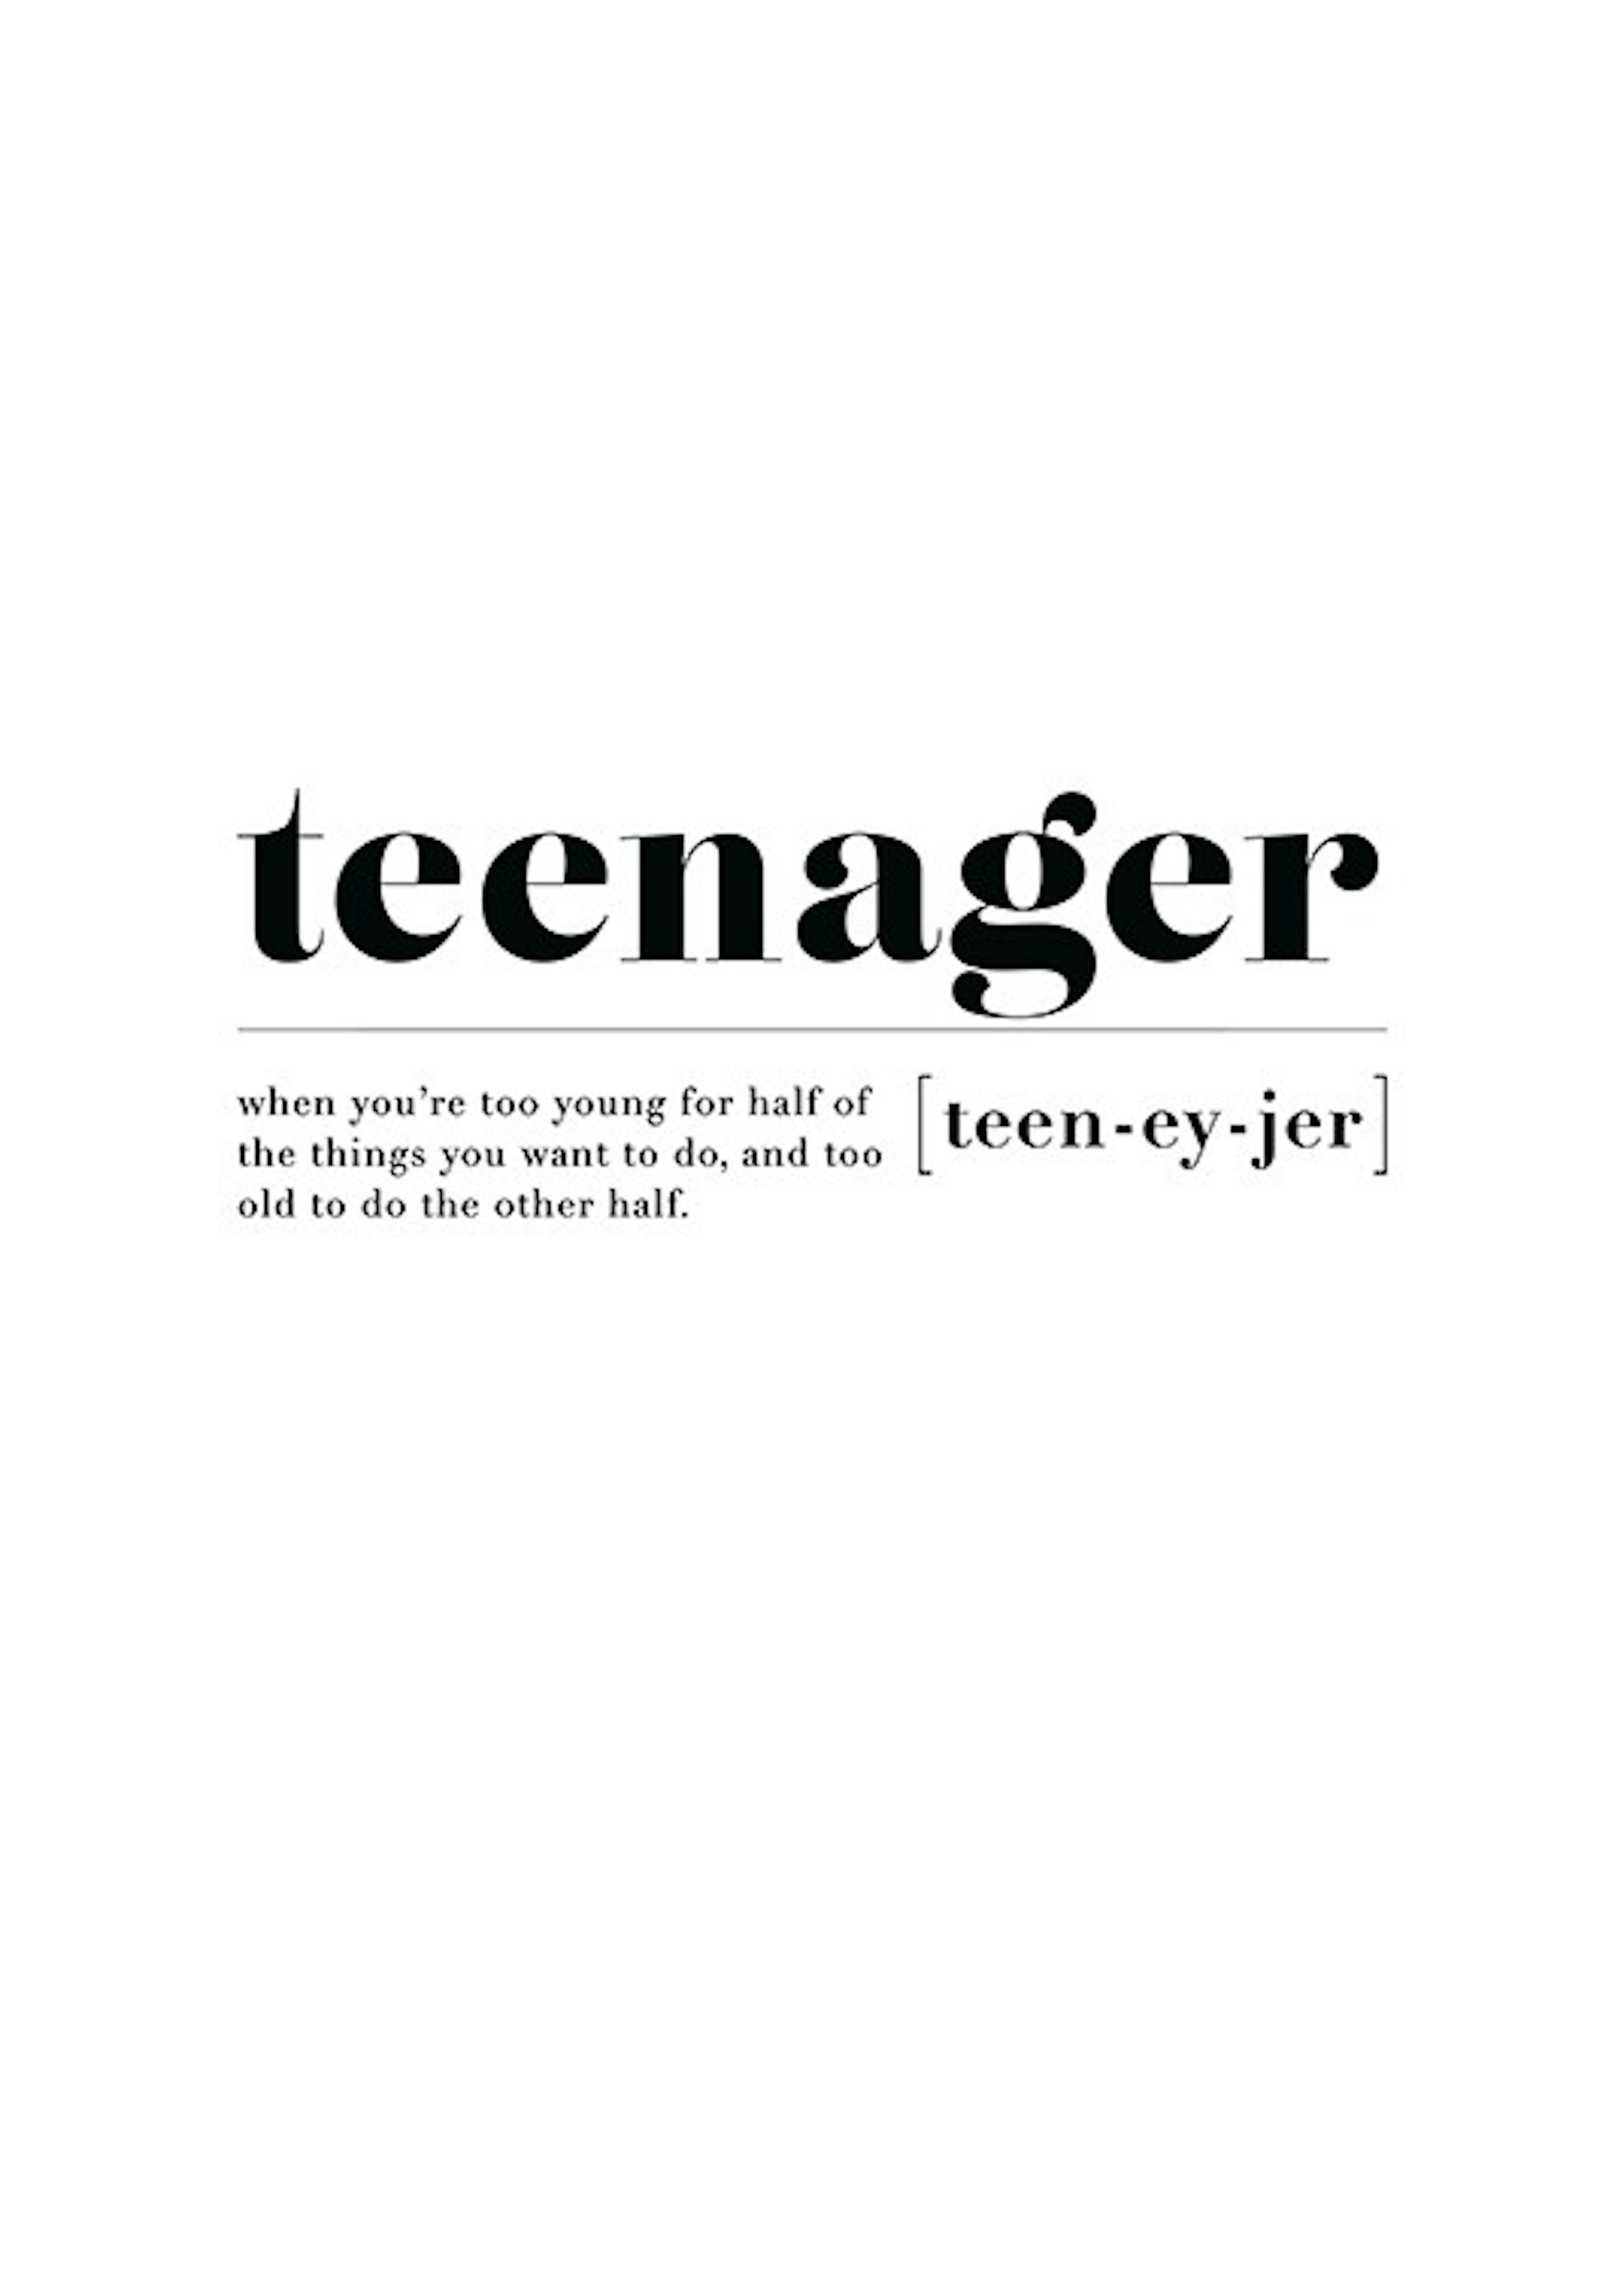 Teenager Print